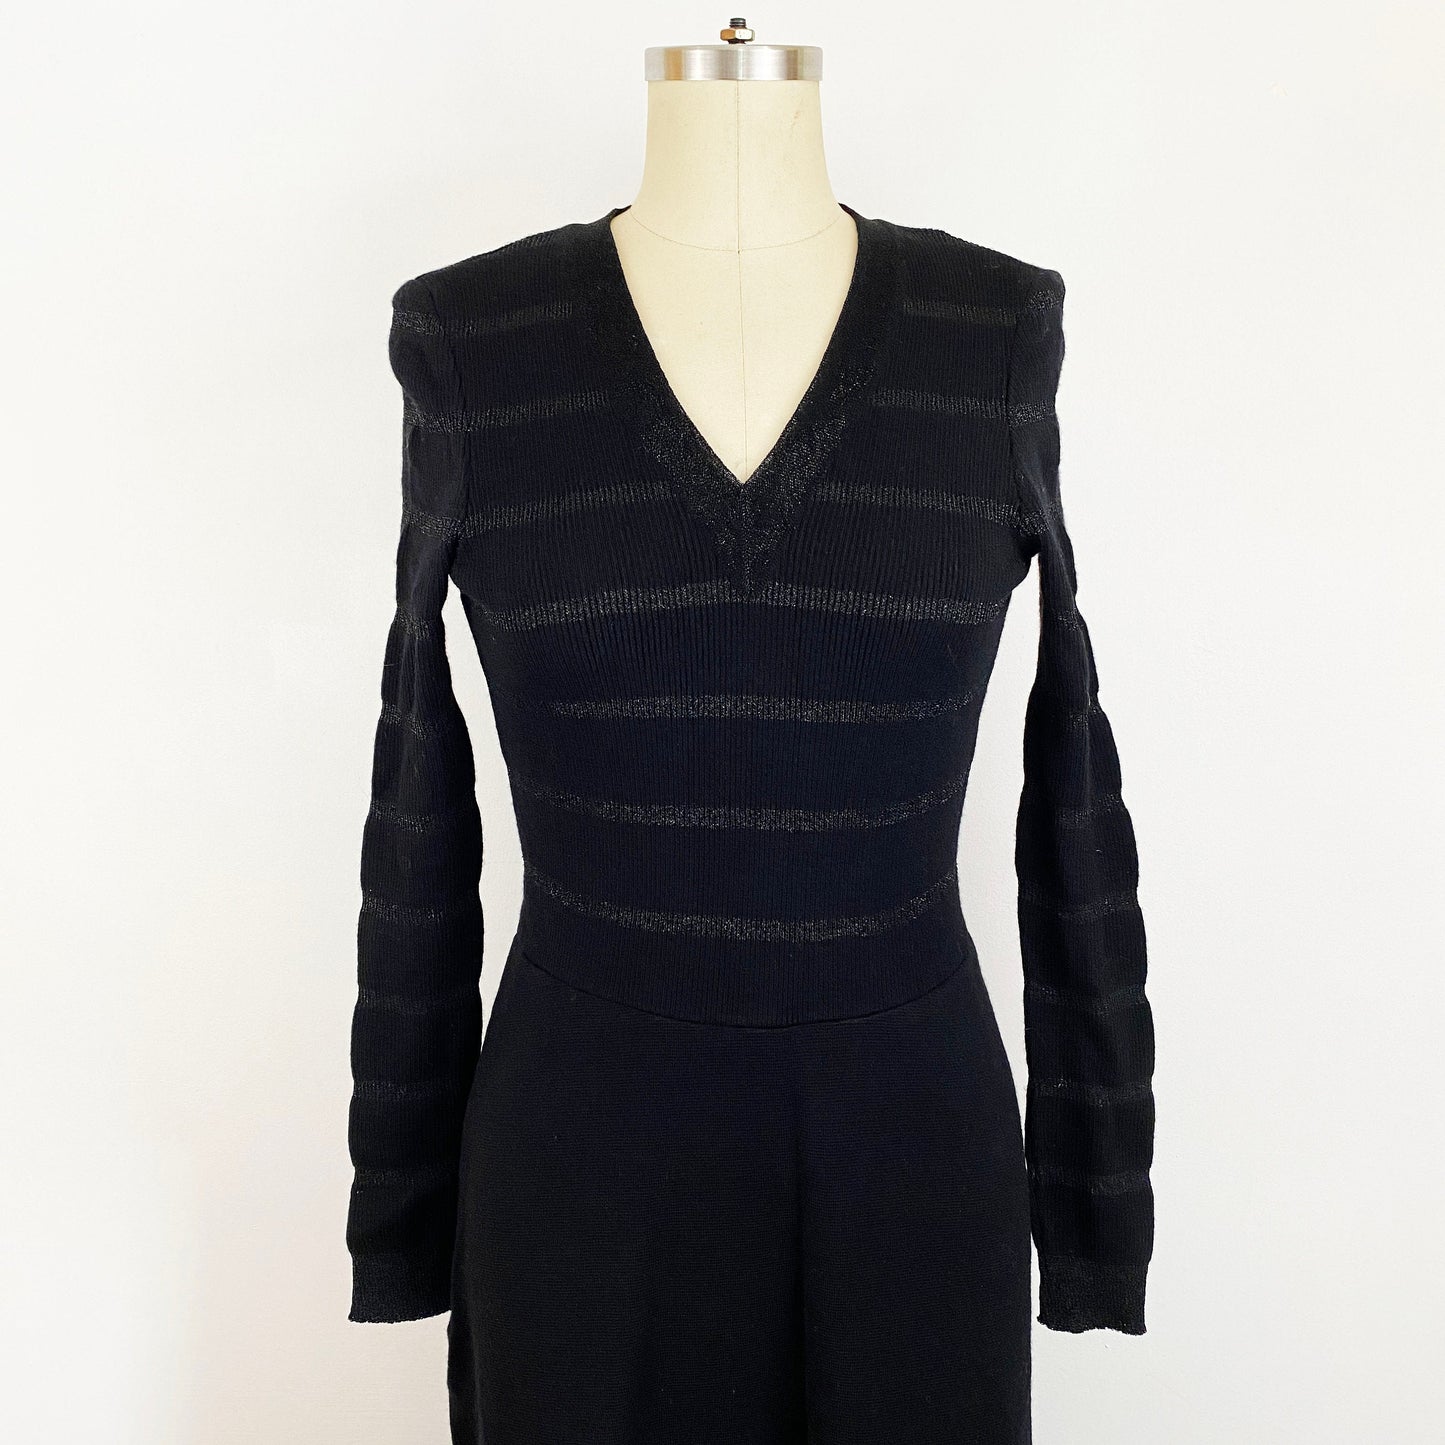 1970's Black Wool and Metallic Knit Striped Sweater Dress Bohemian Boho Chic Hippie Knit A-line Maxi Goth Rocker / Daniela Italy / Size Medium